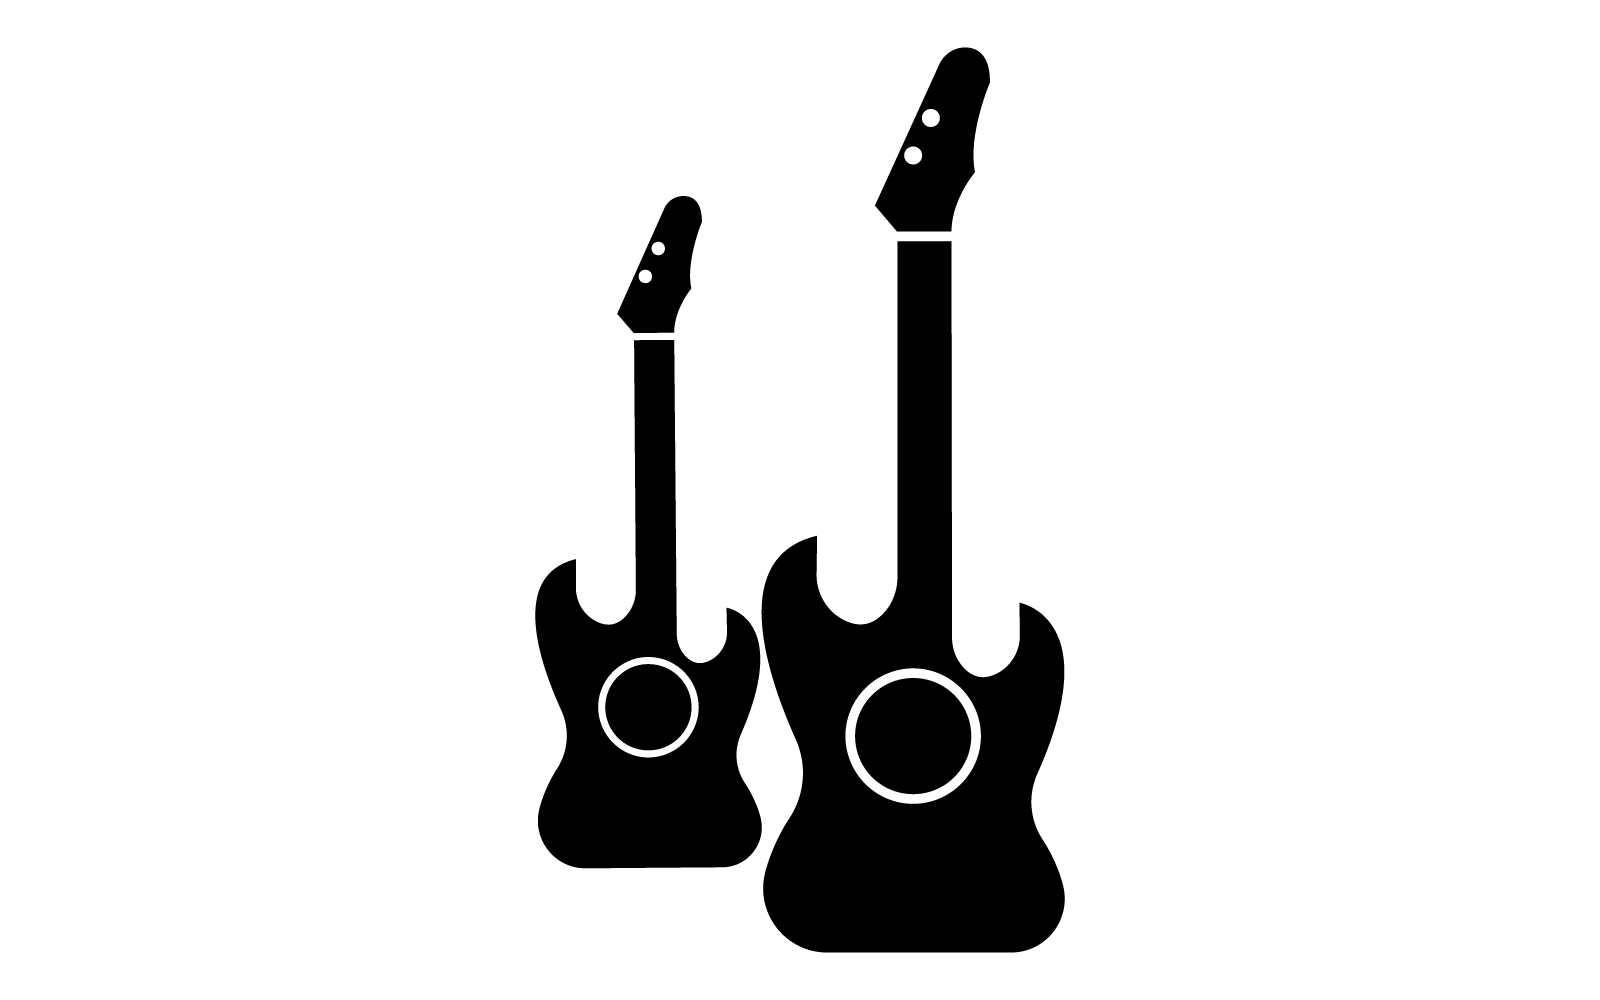 Guitar logo design vector illustration